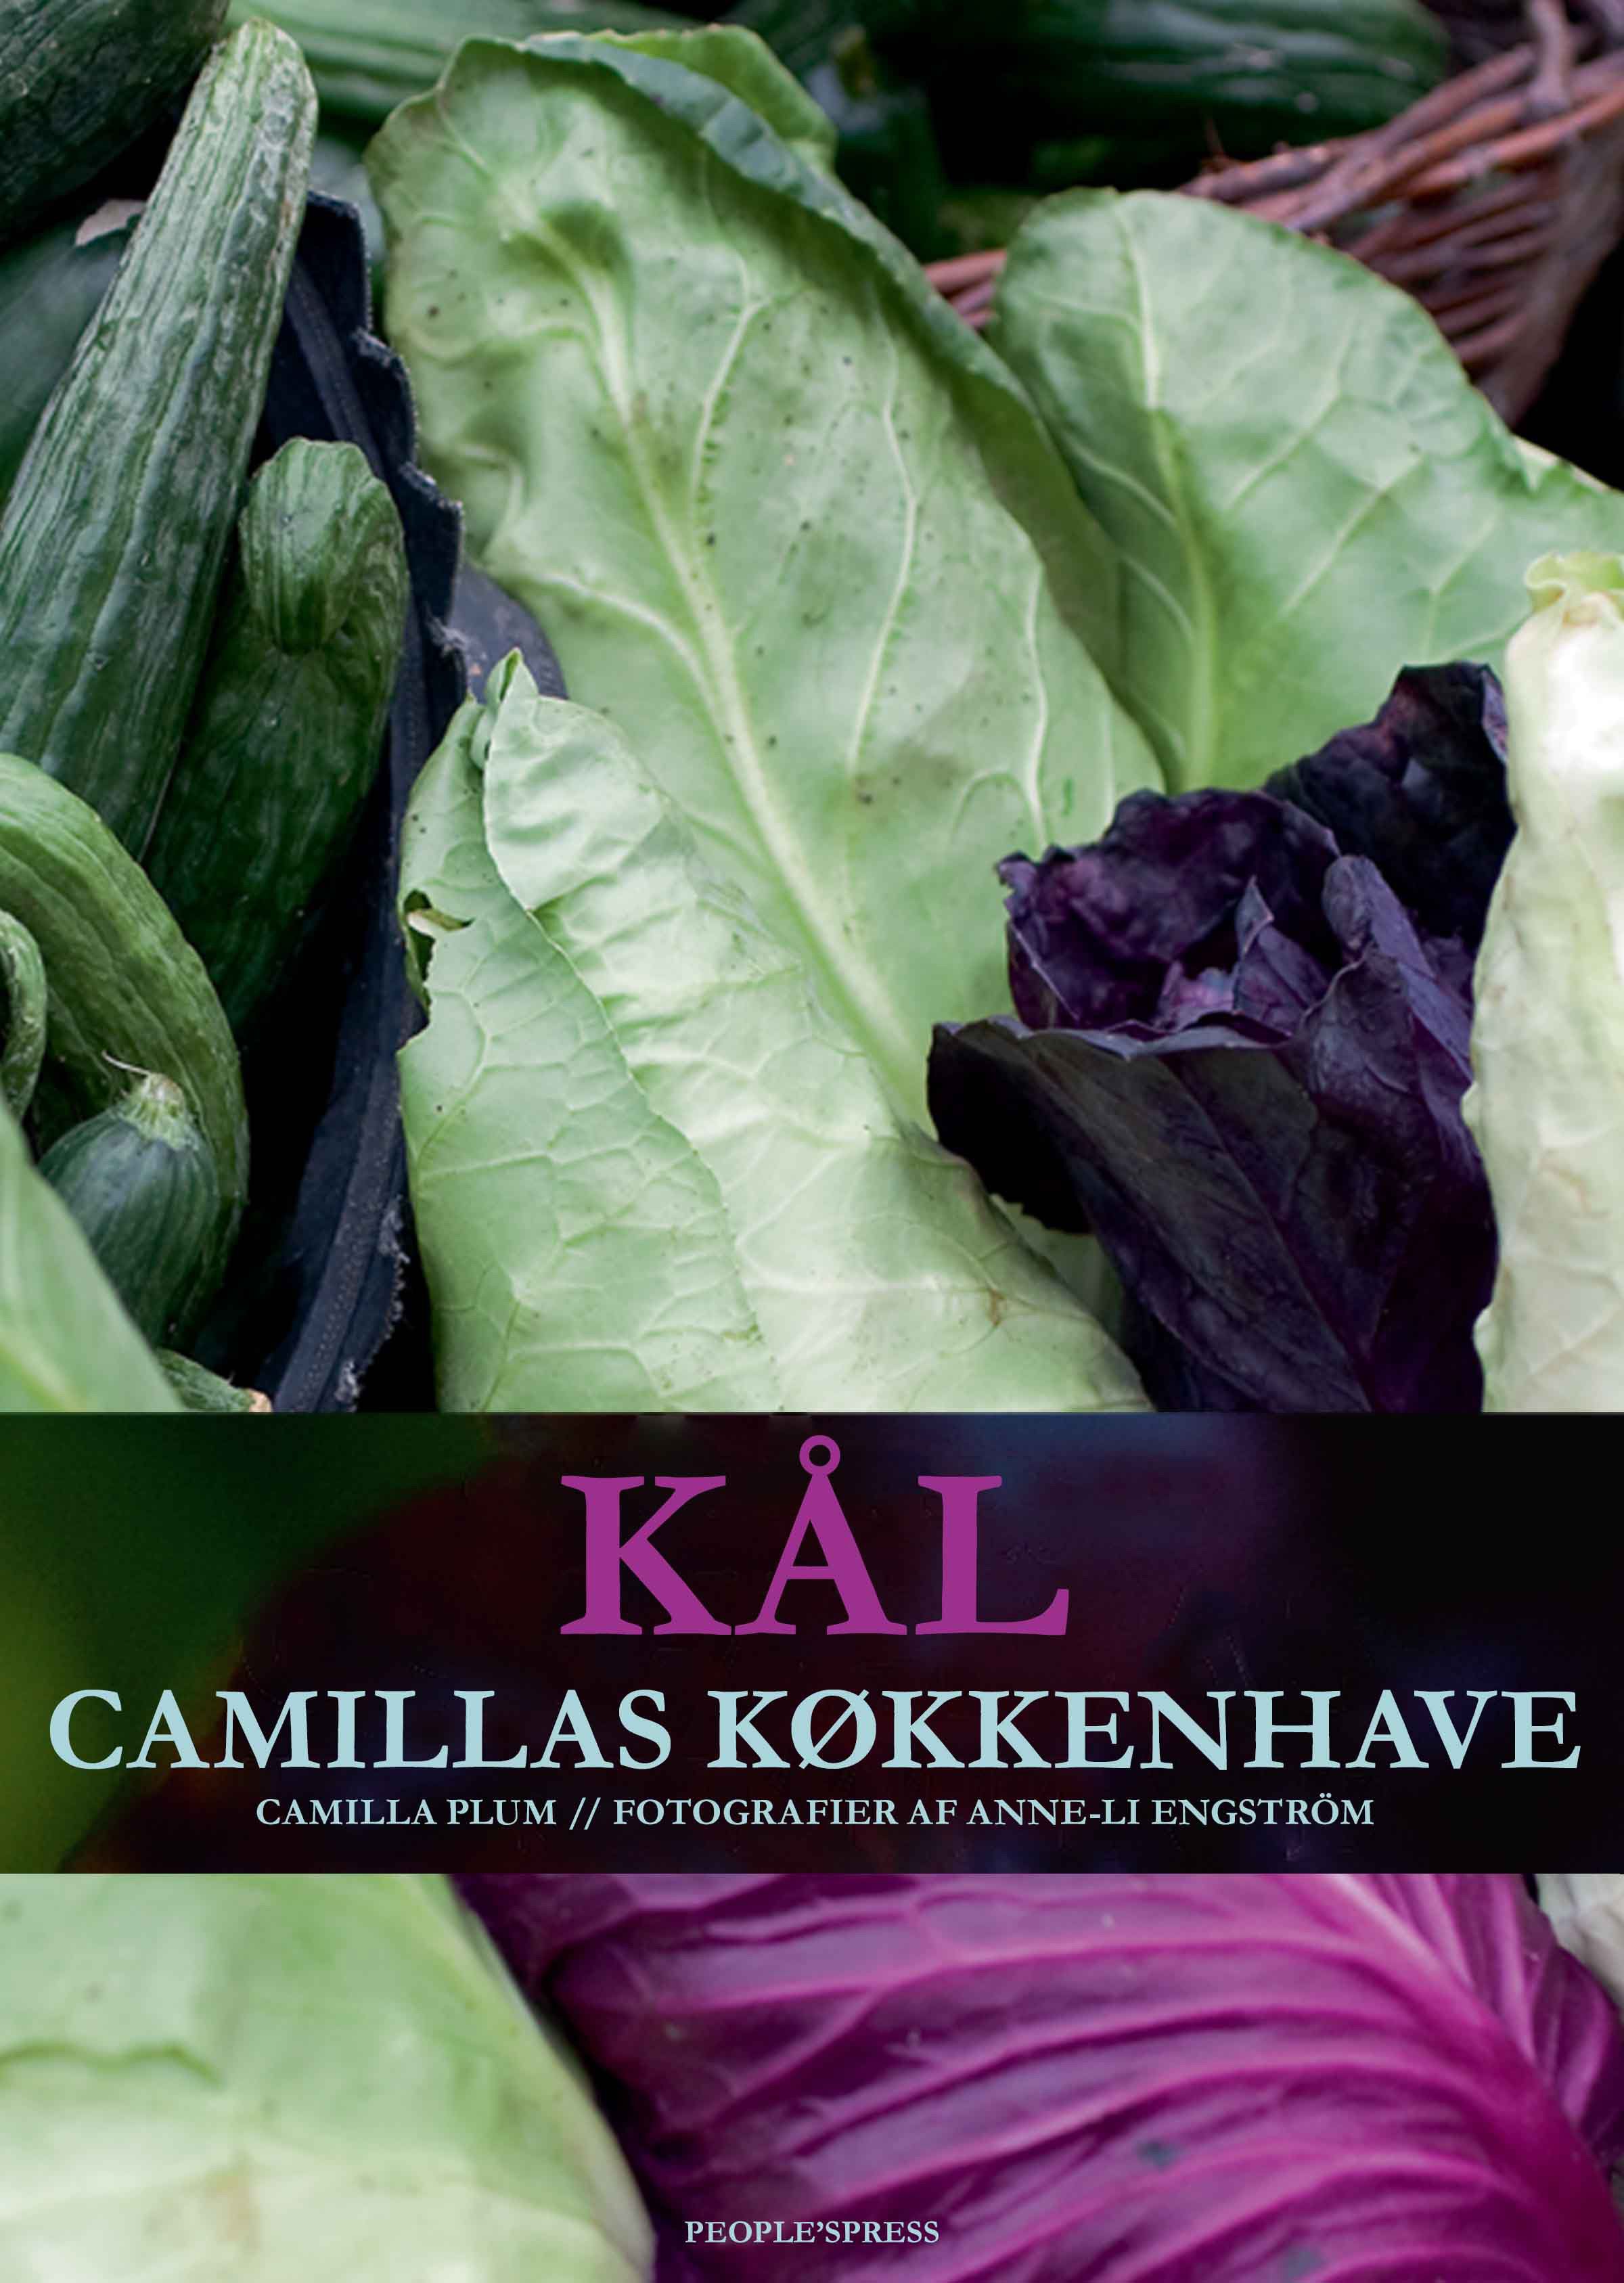 Kål - Camillas køkkenhave, e-bog af Camilla Plum